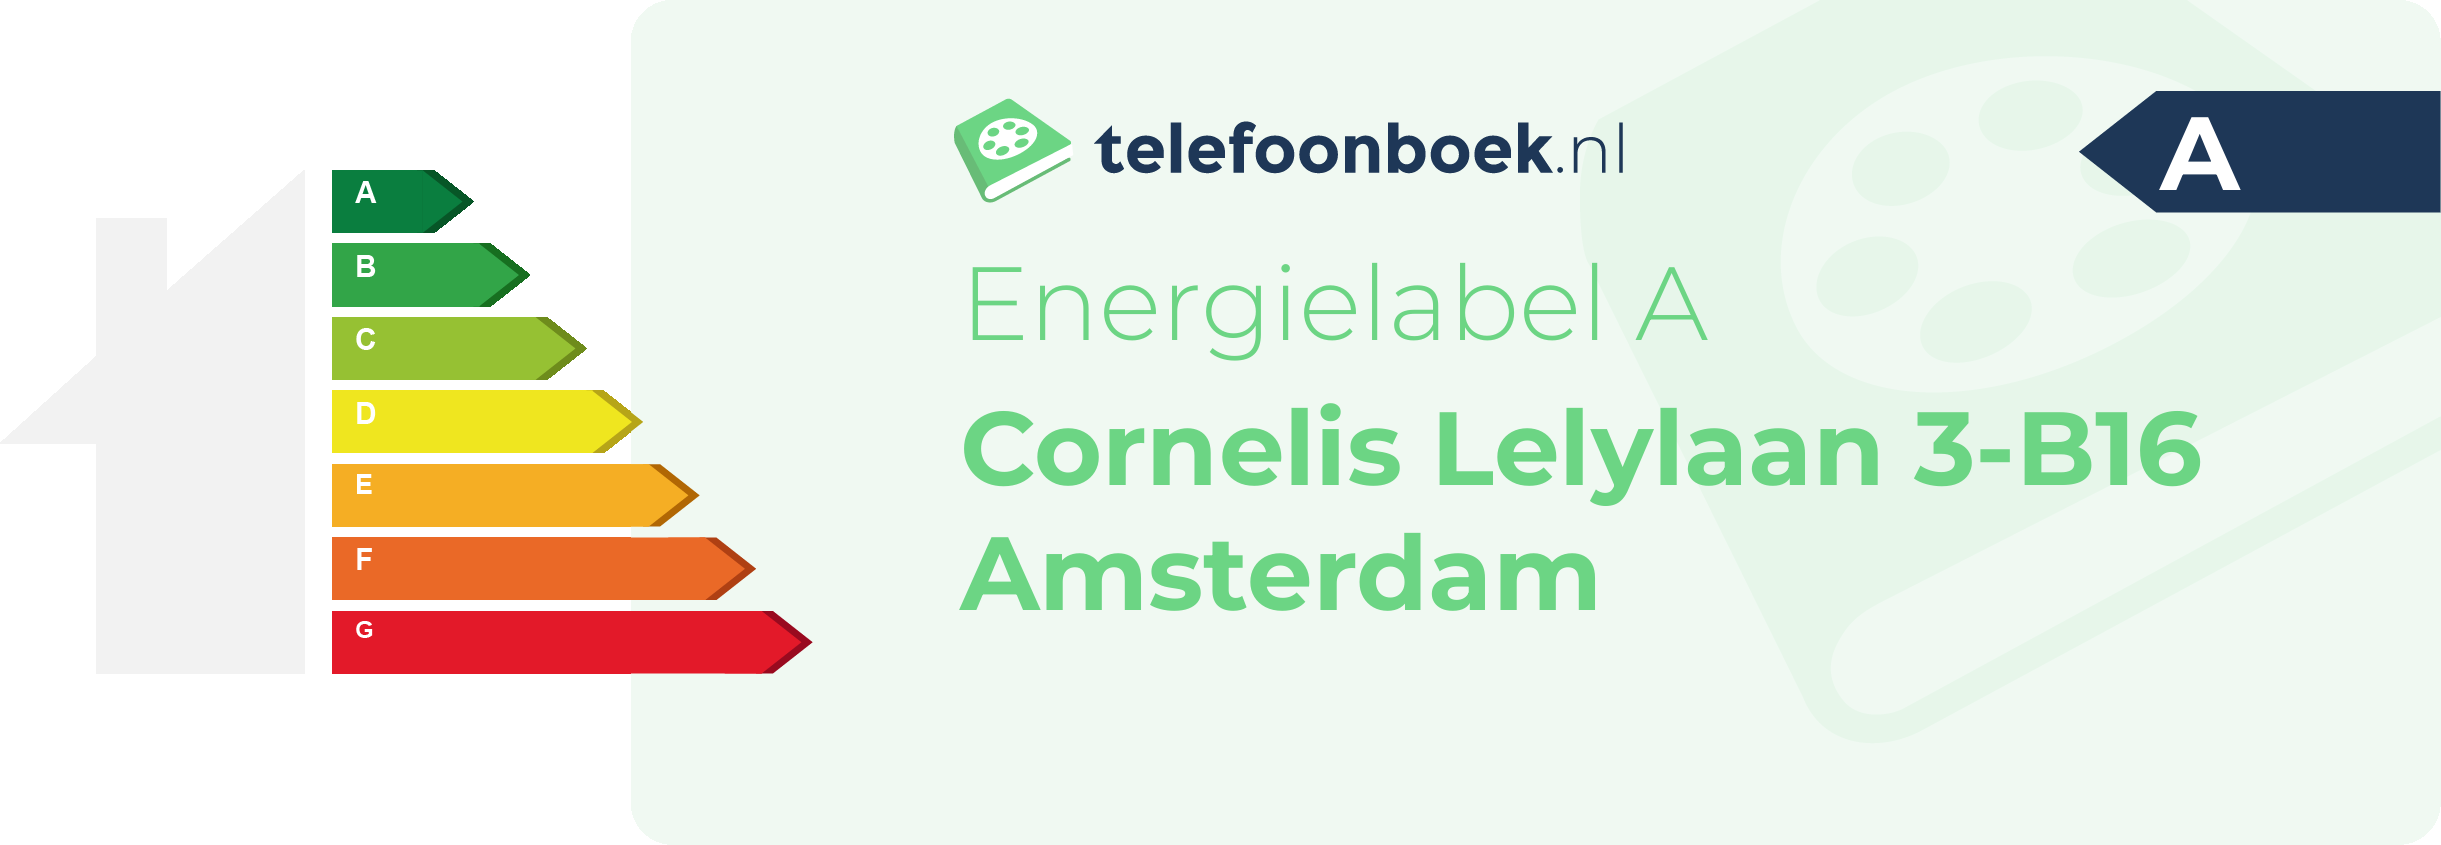 Energielabel Cornelis Lelylaan 3-B16 Amsterdam